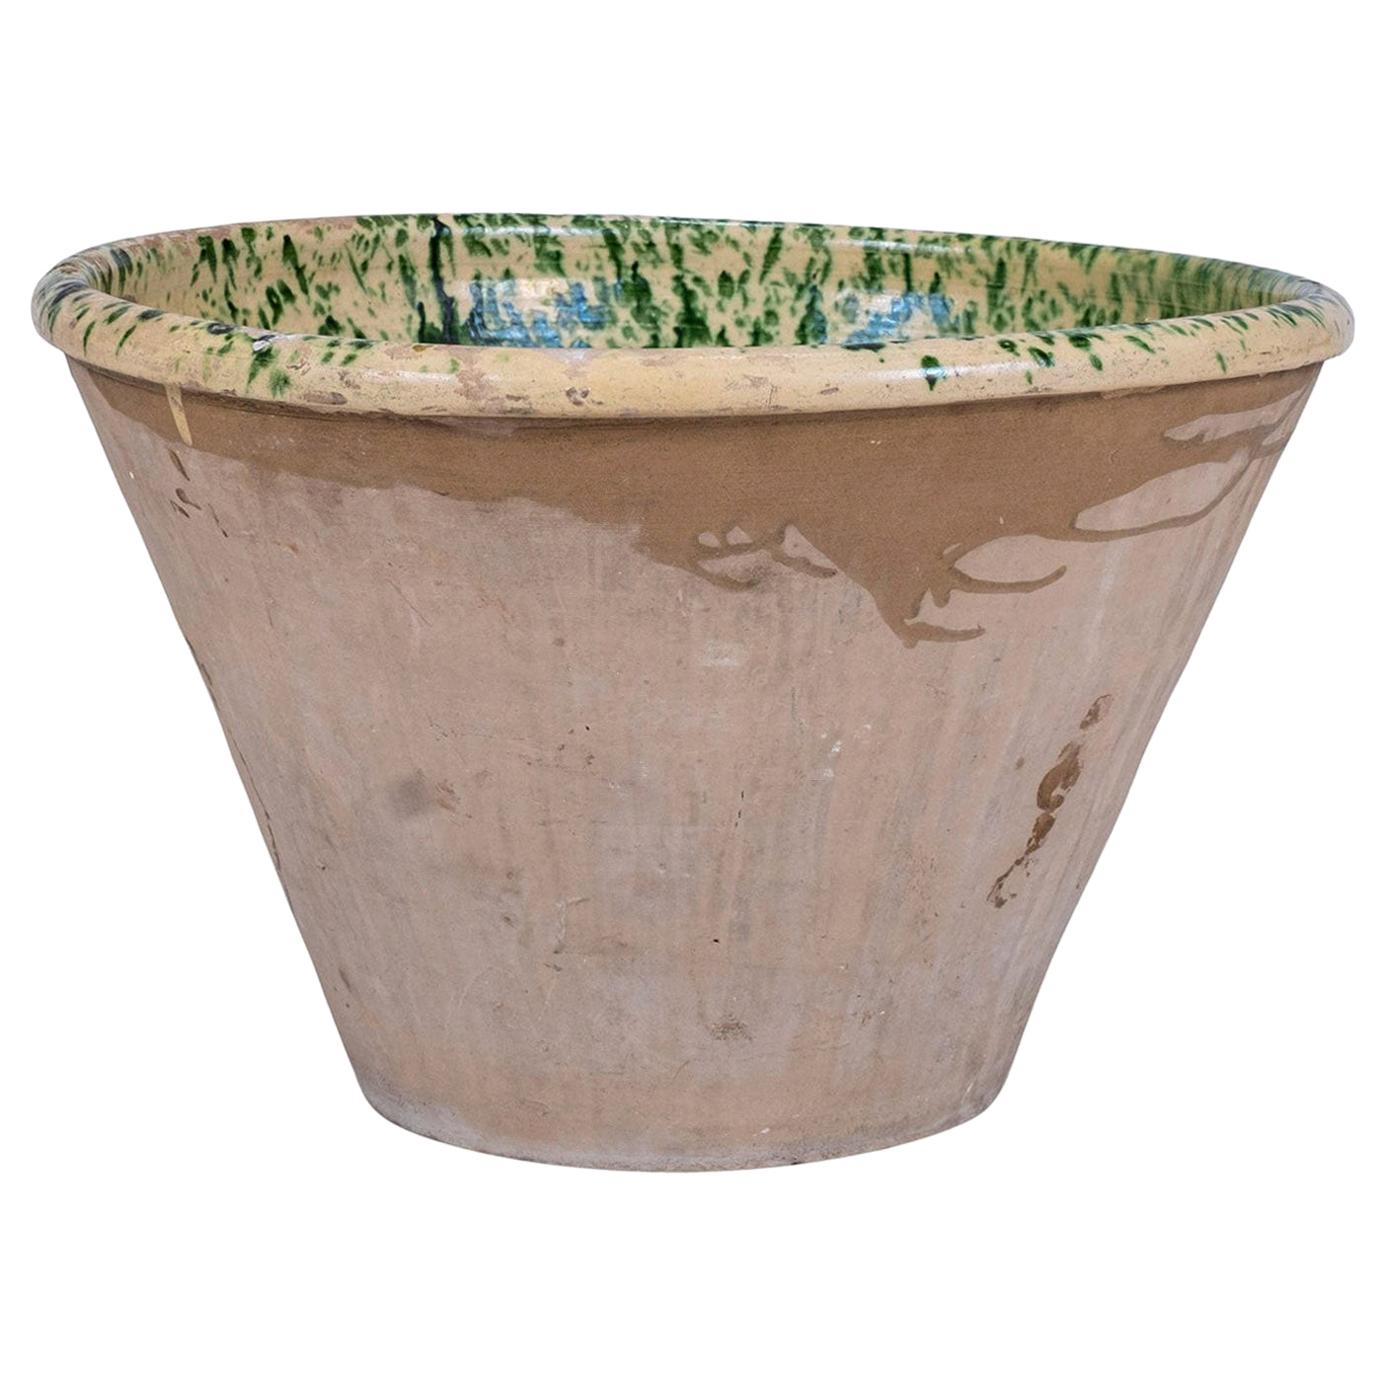 Large Colorful Glazed Terracotta Passata Bowl